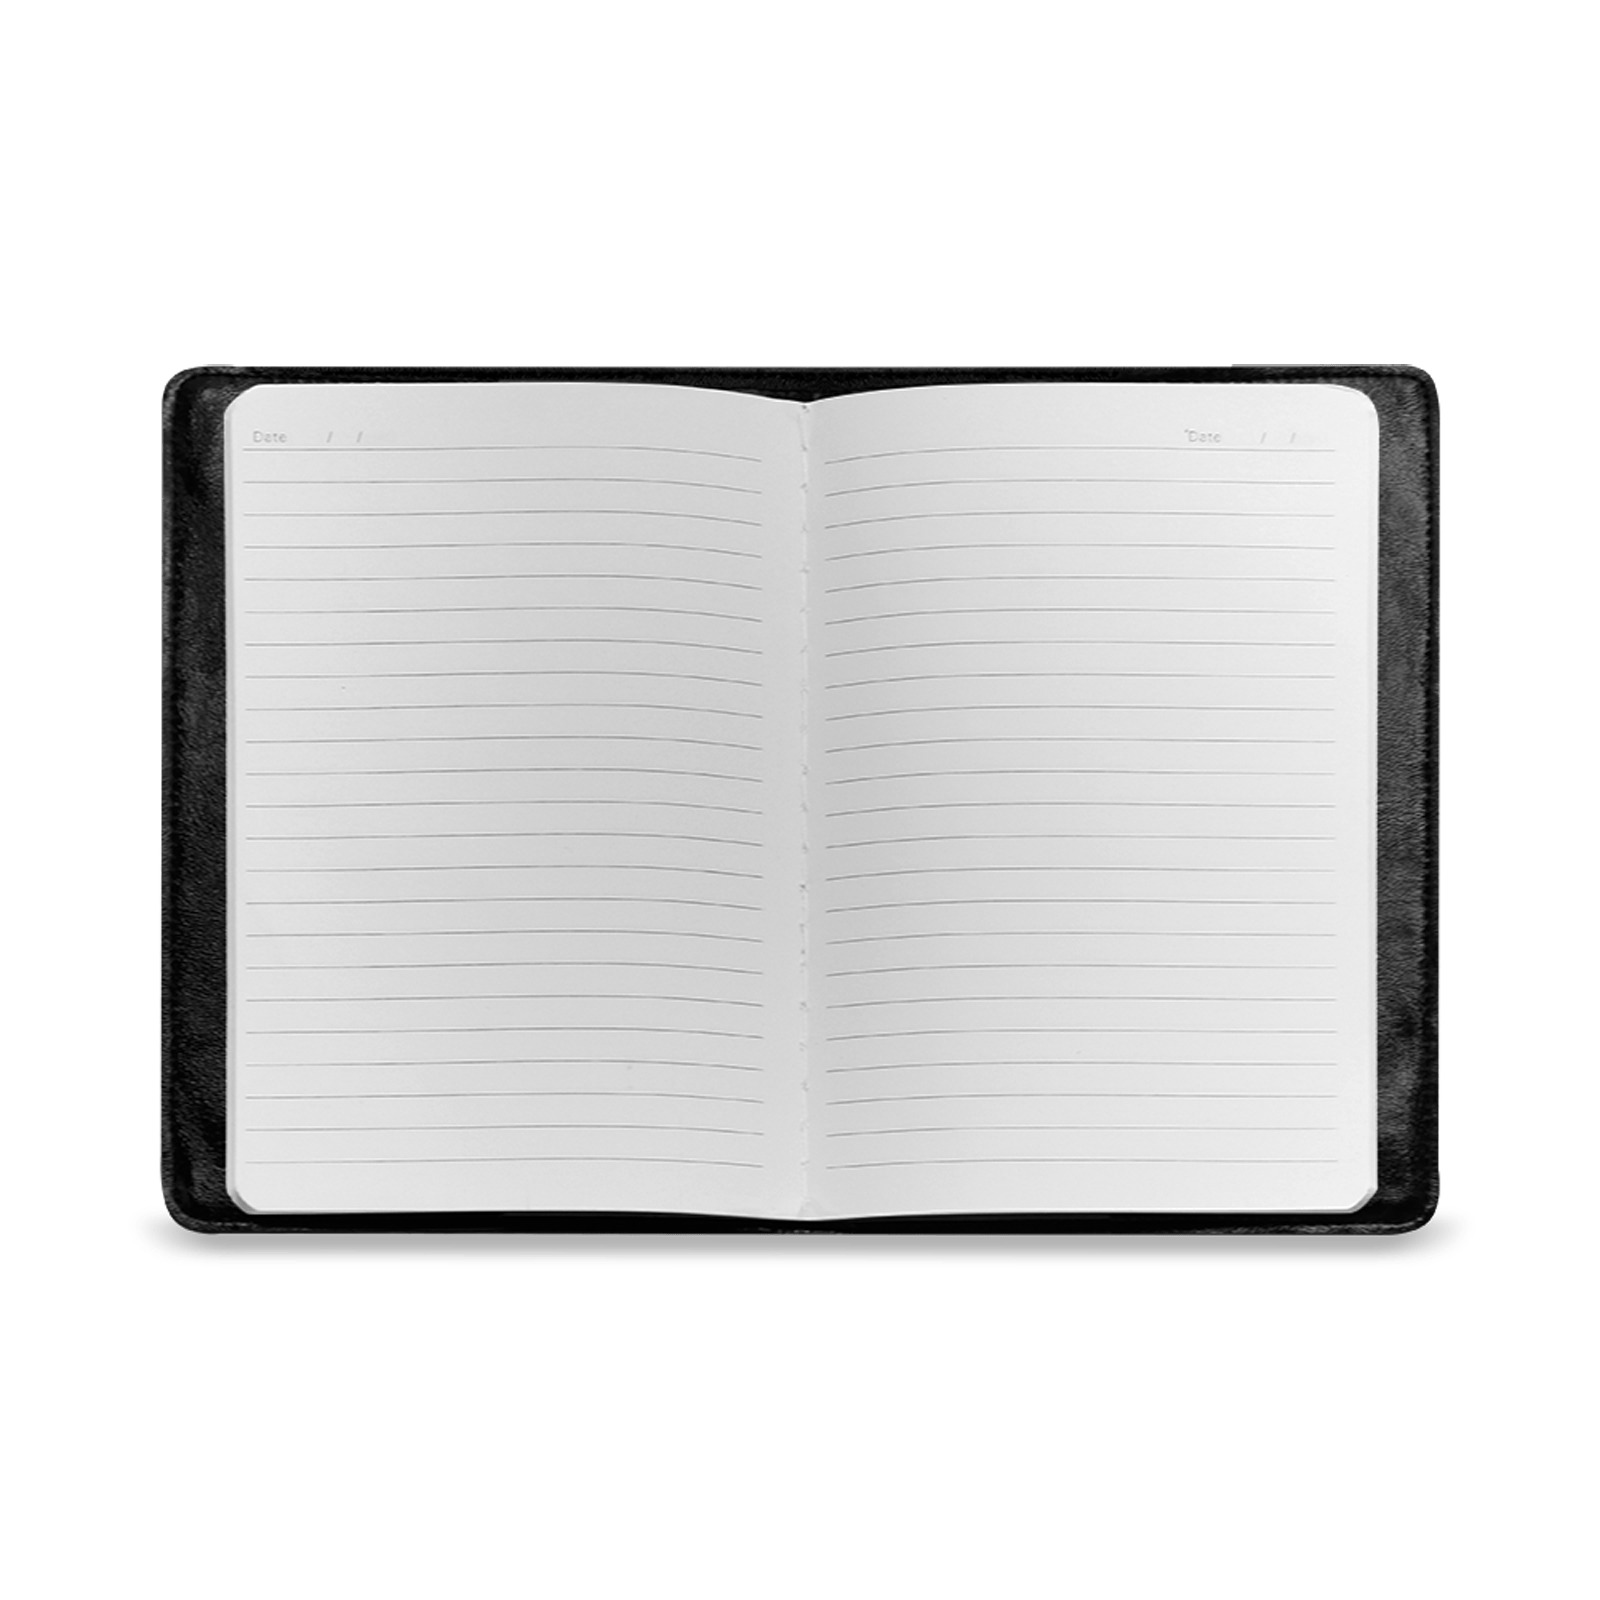 Homo singularity Custom NoteBook A5